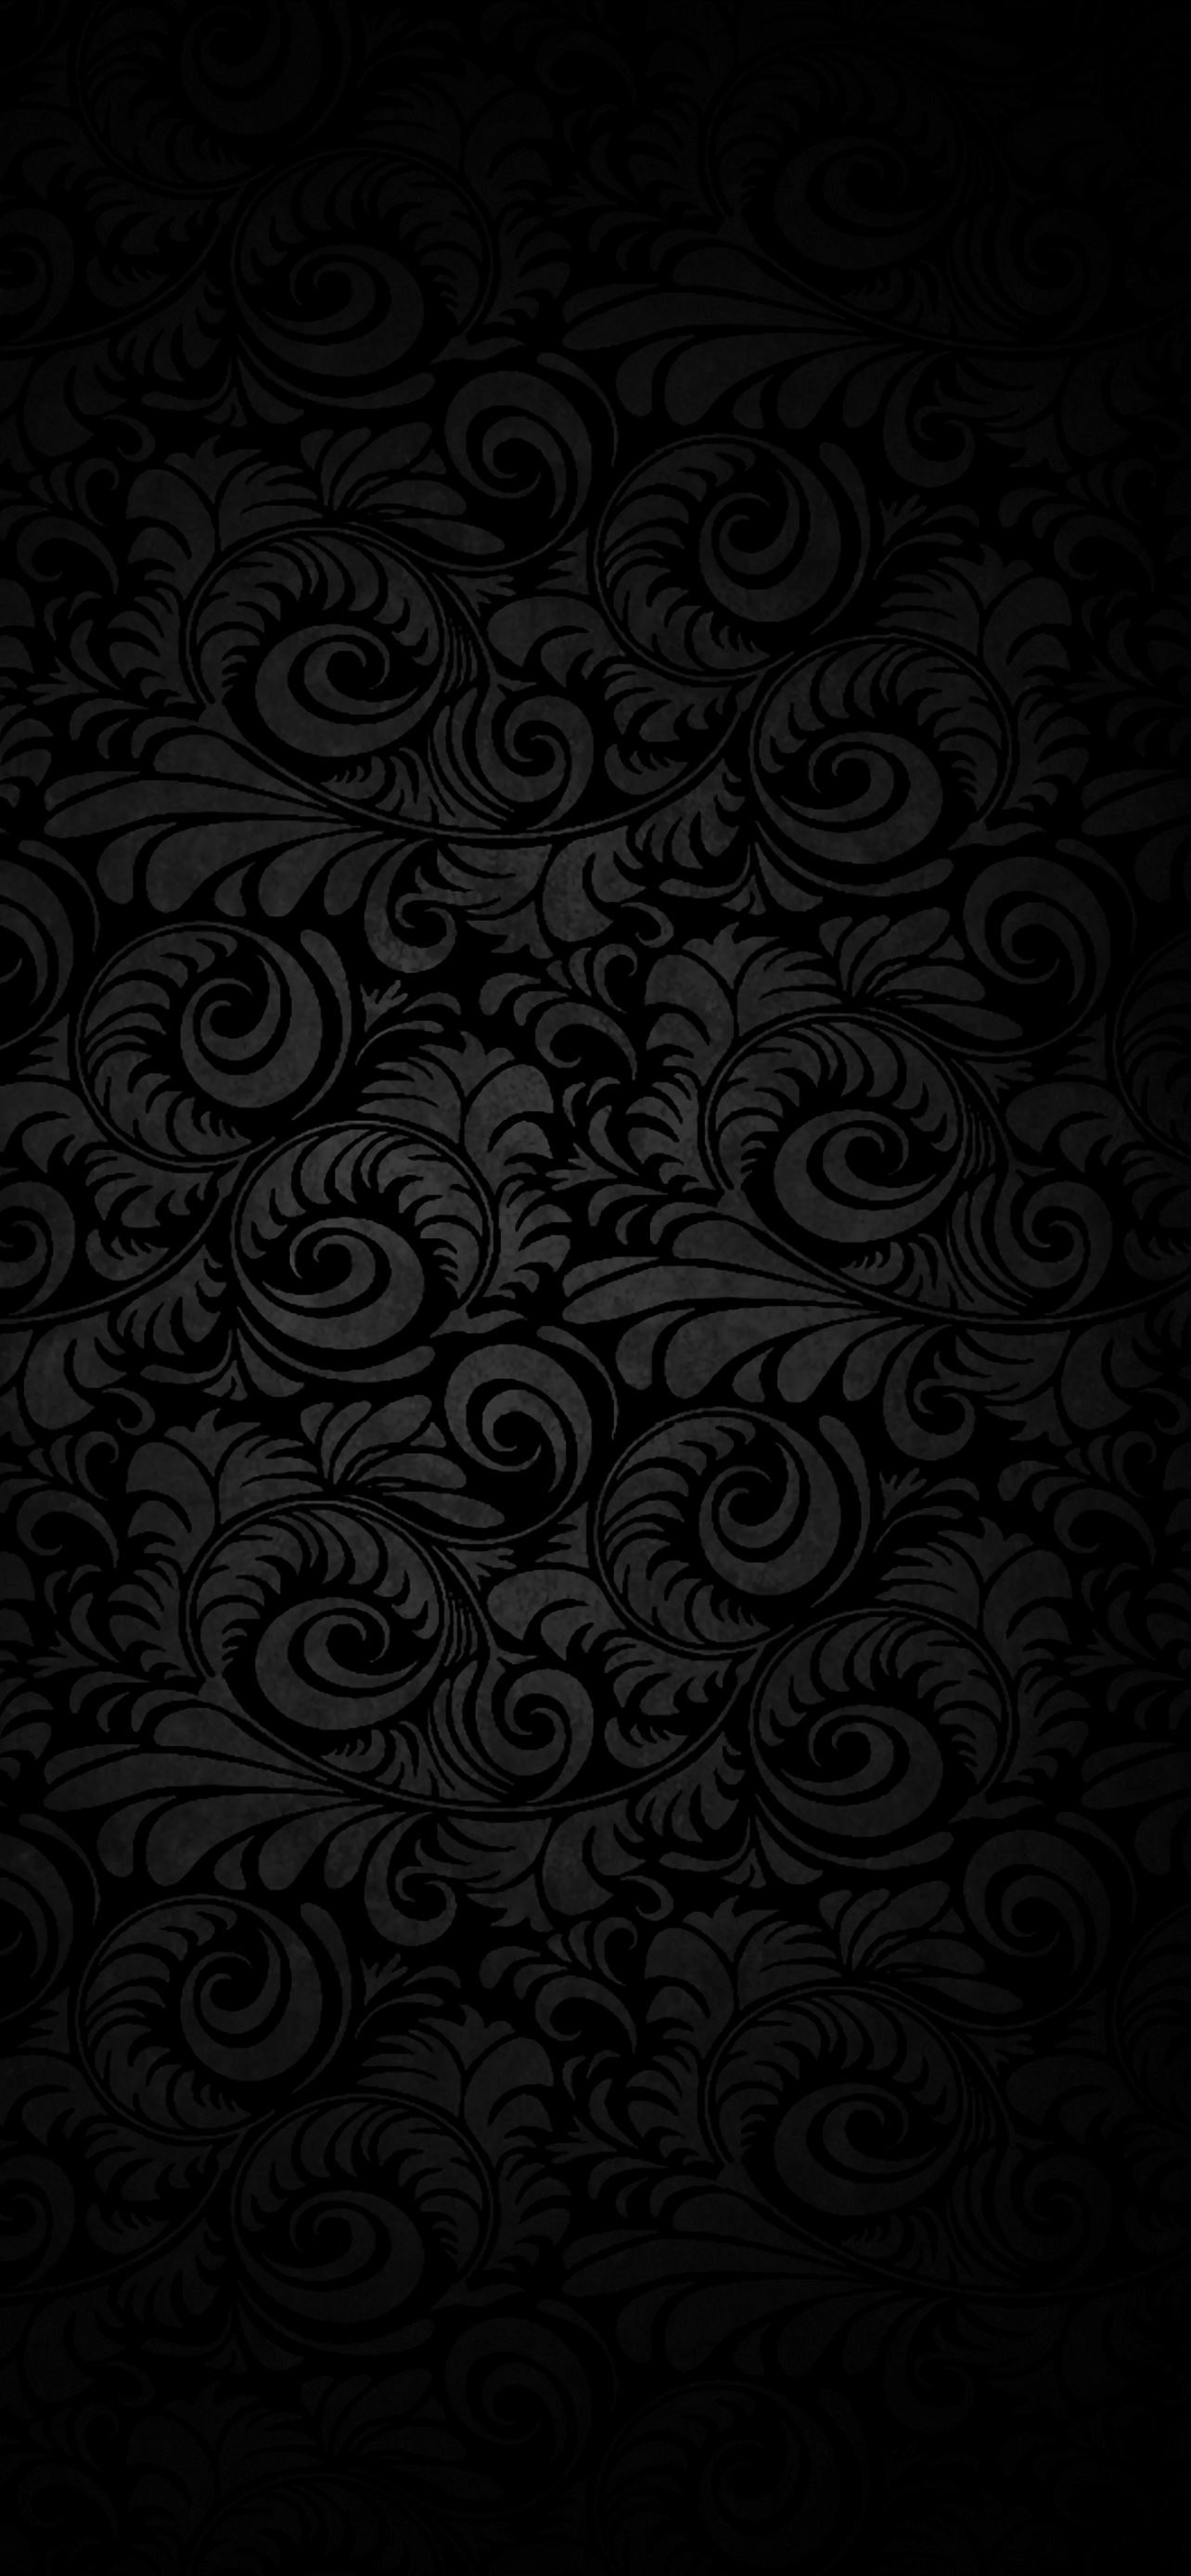 Dark patterned background iPhone Wallpaper Free Download